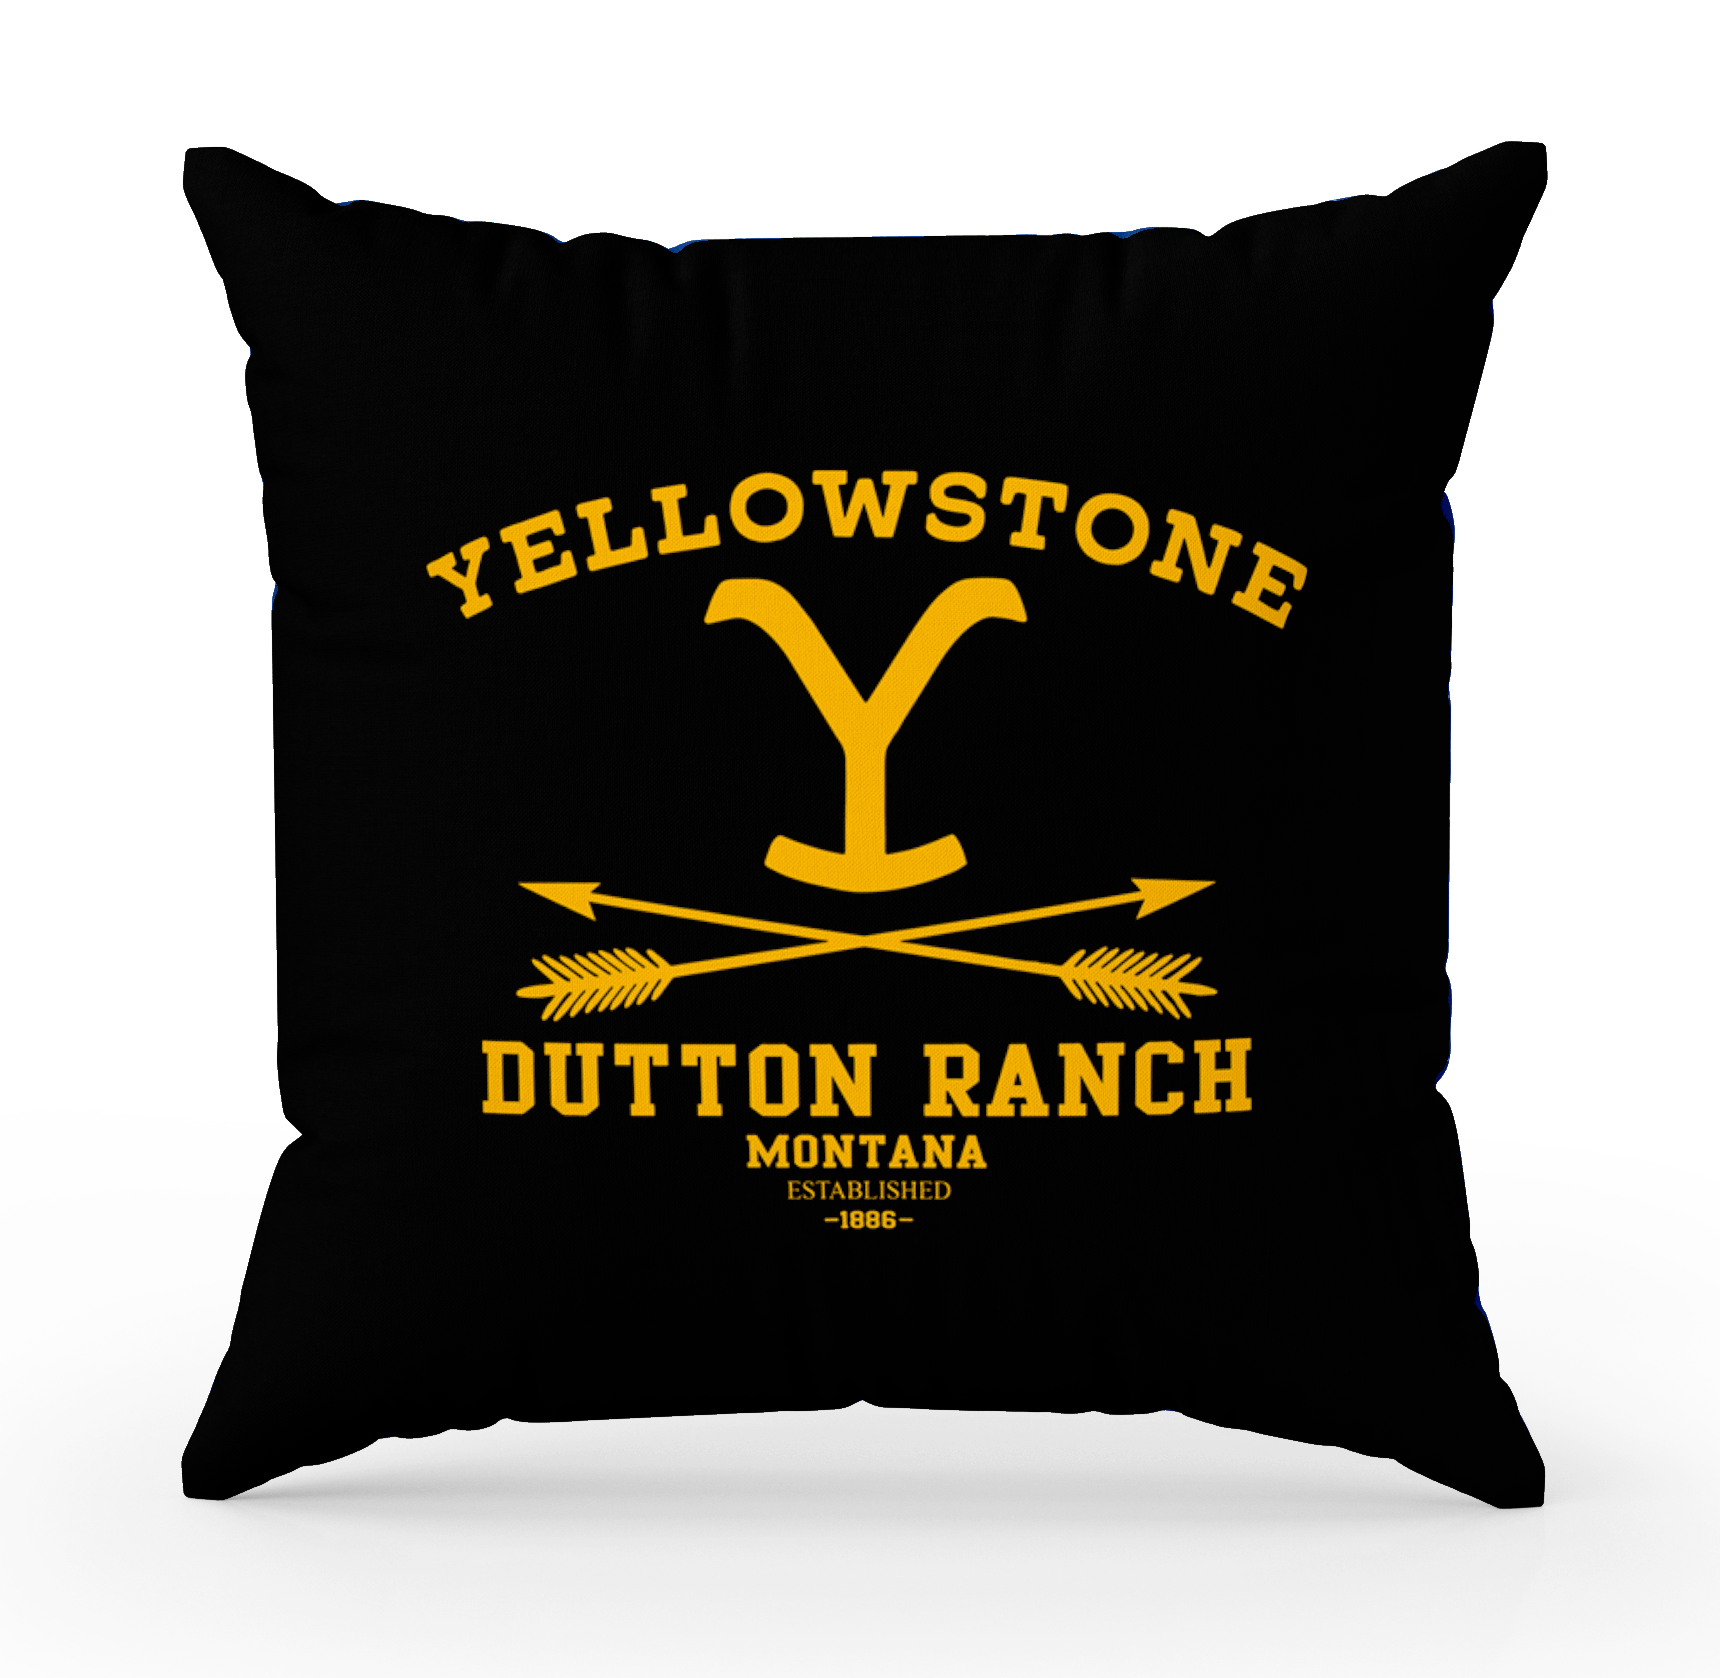 Yellowstone - Dutton Ranch Items at Sam's Club